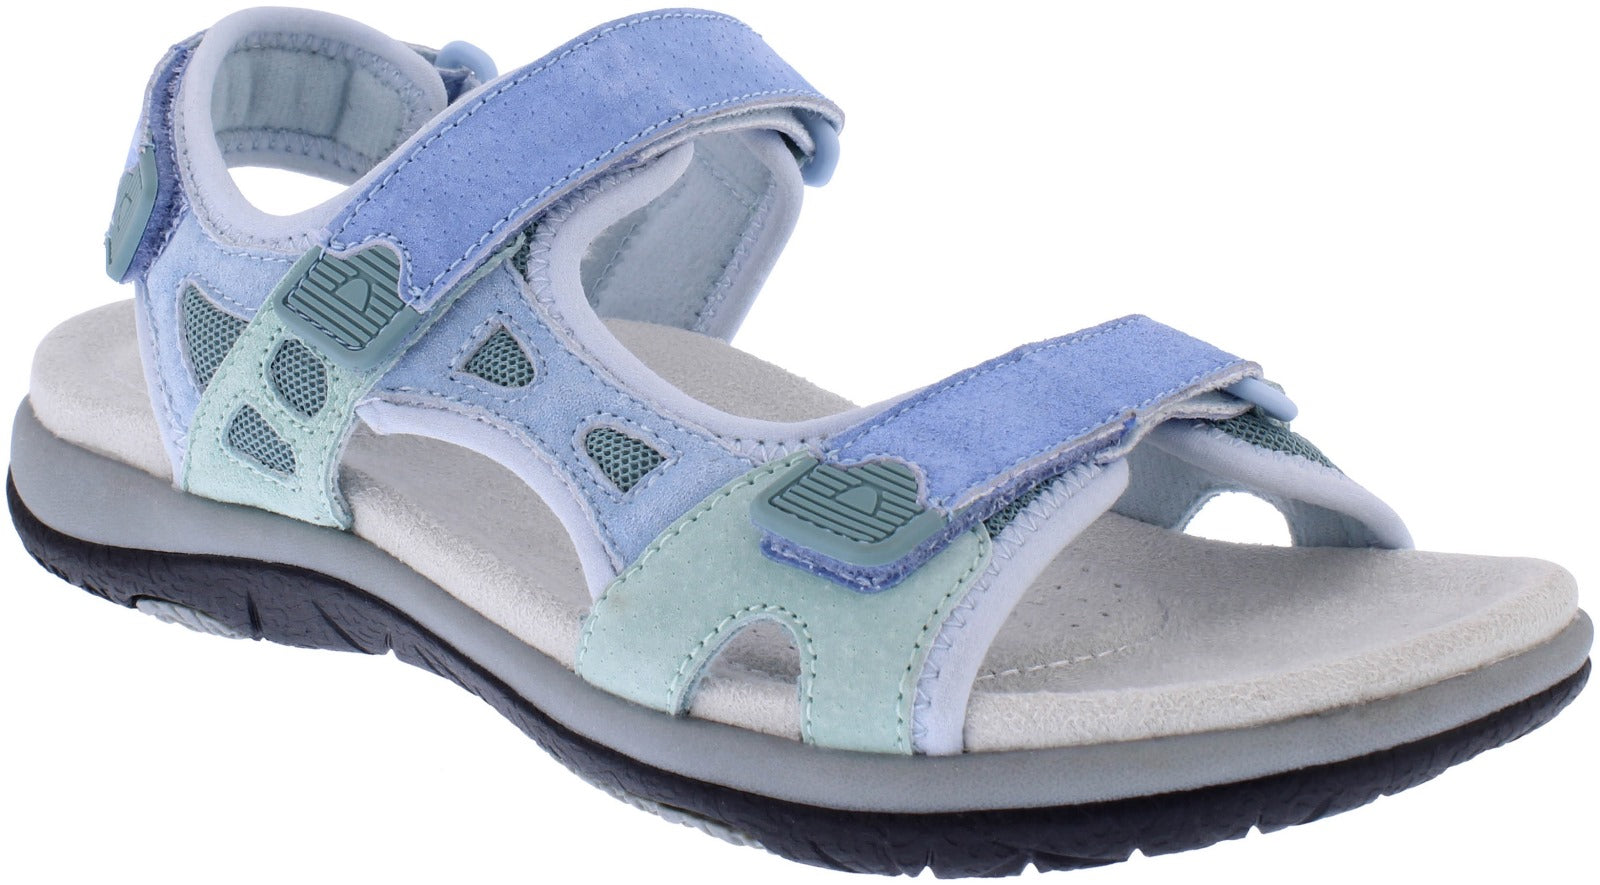 Free Spirit Zeal Ladies Blue Multi Suede & Textile Touch Fastening Sandals